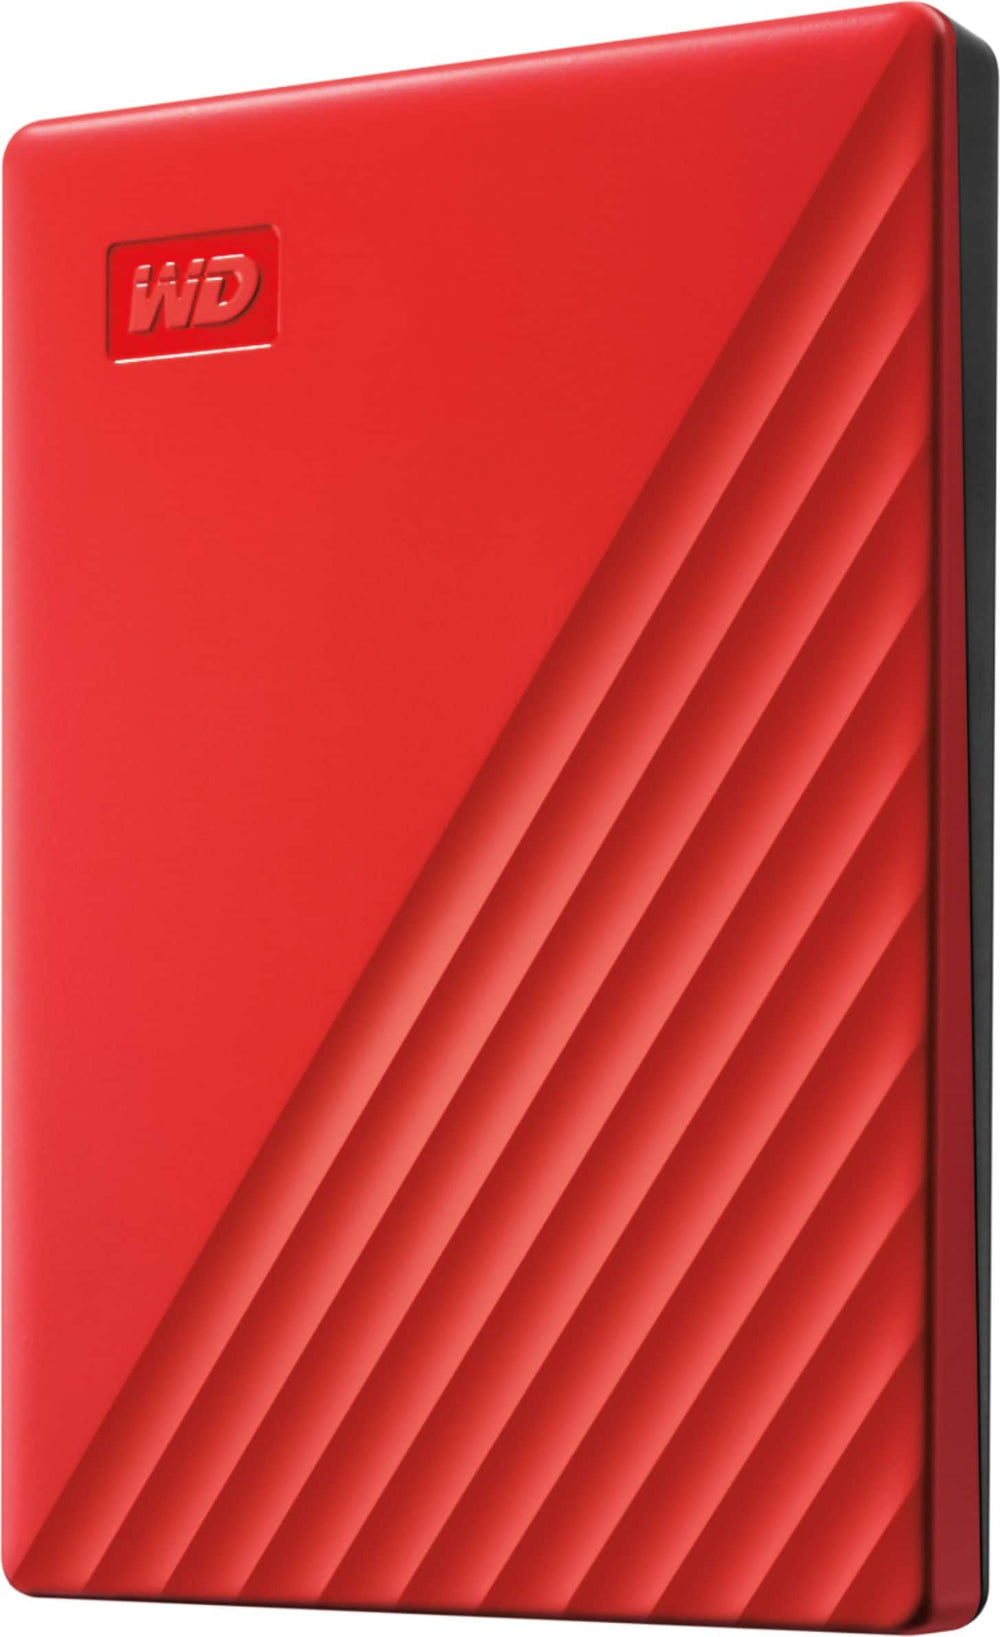 WD - My Passport 2TB External USB 3.0 Portable Hard Drive - Red_1